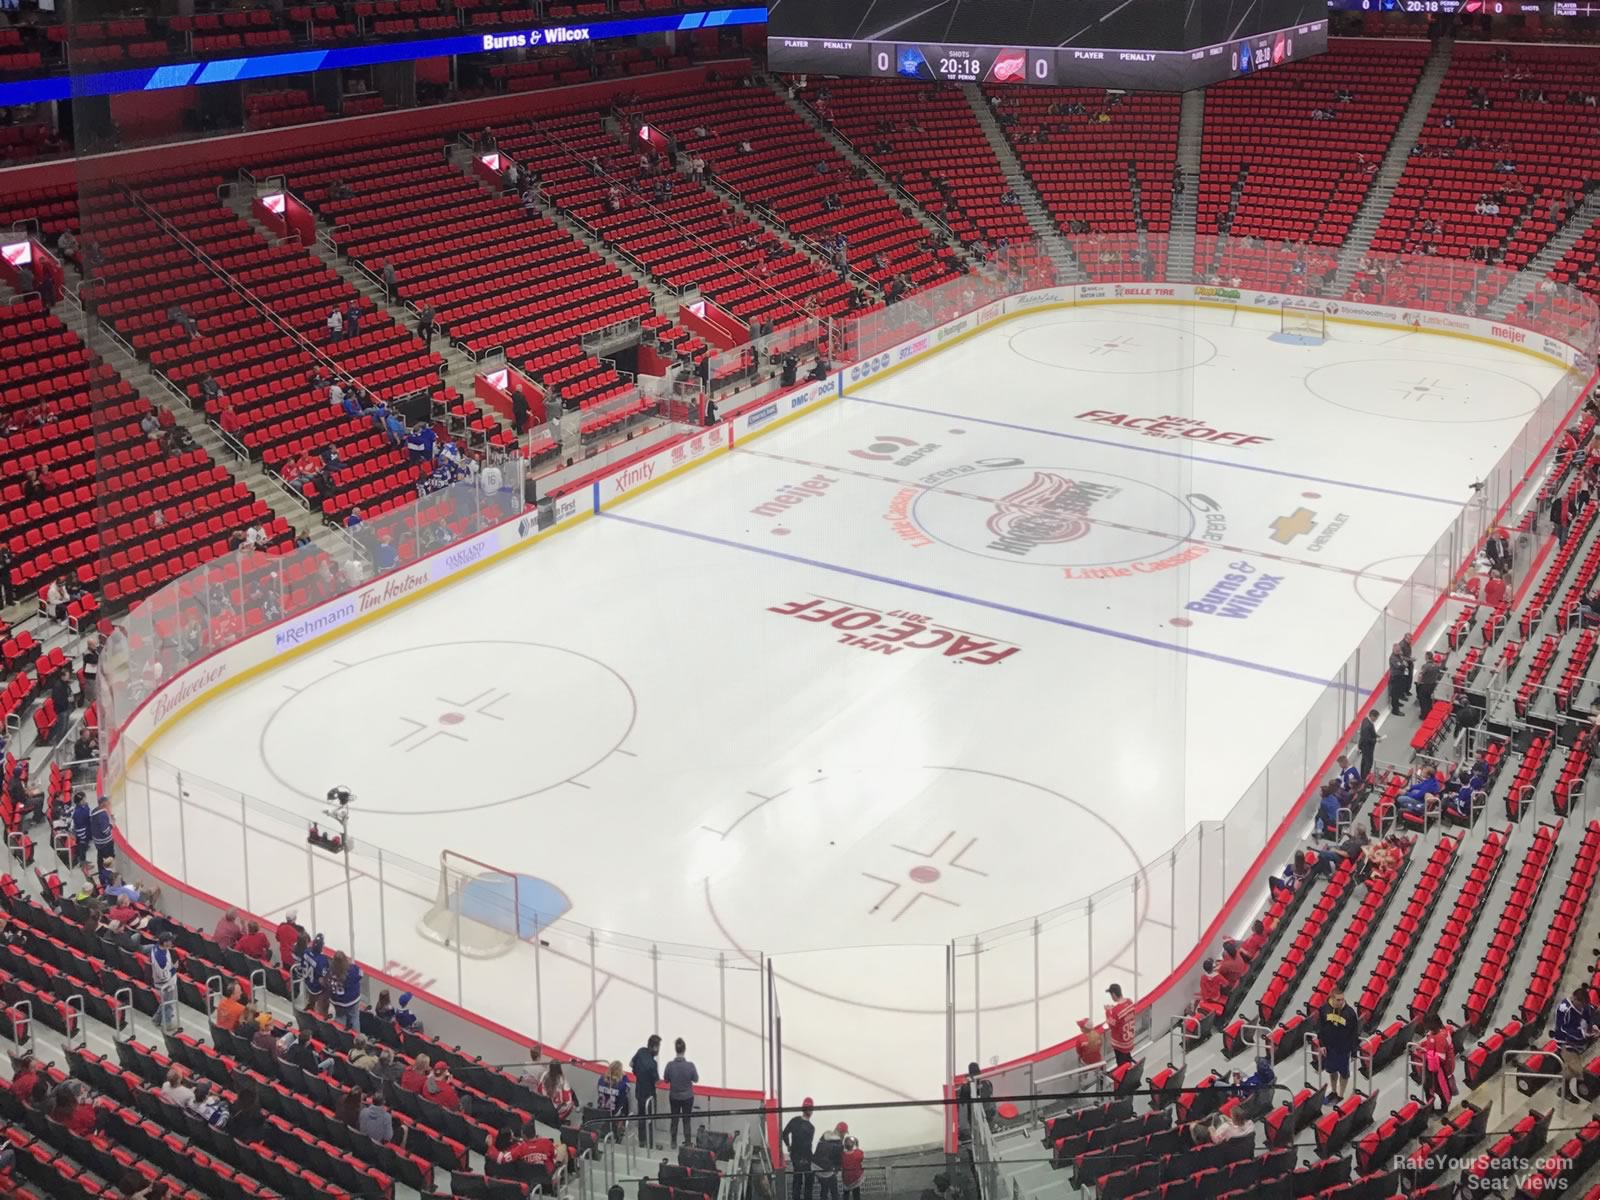 mezzanine 17, row 4 seat view  for hockey - little caesars arena